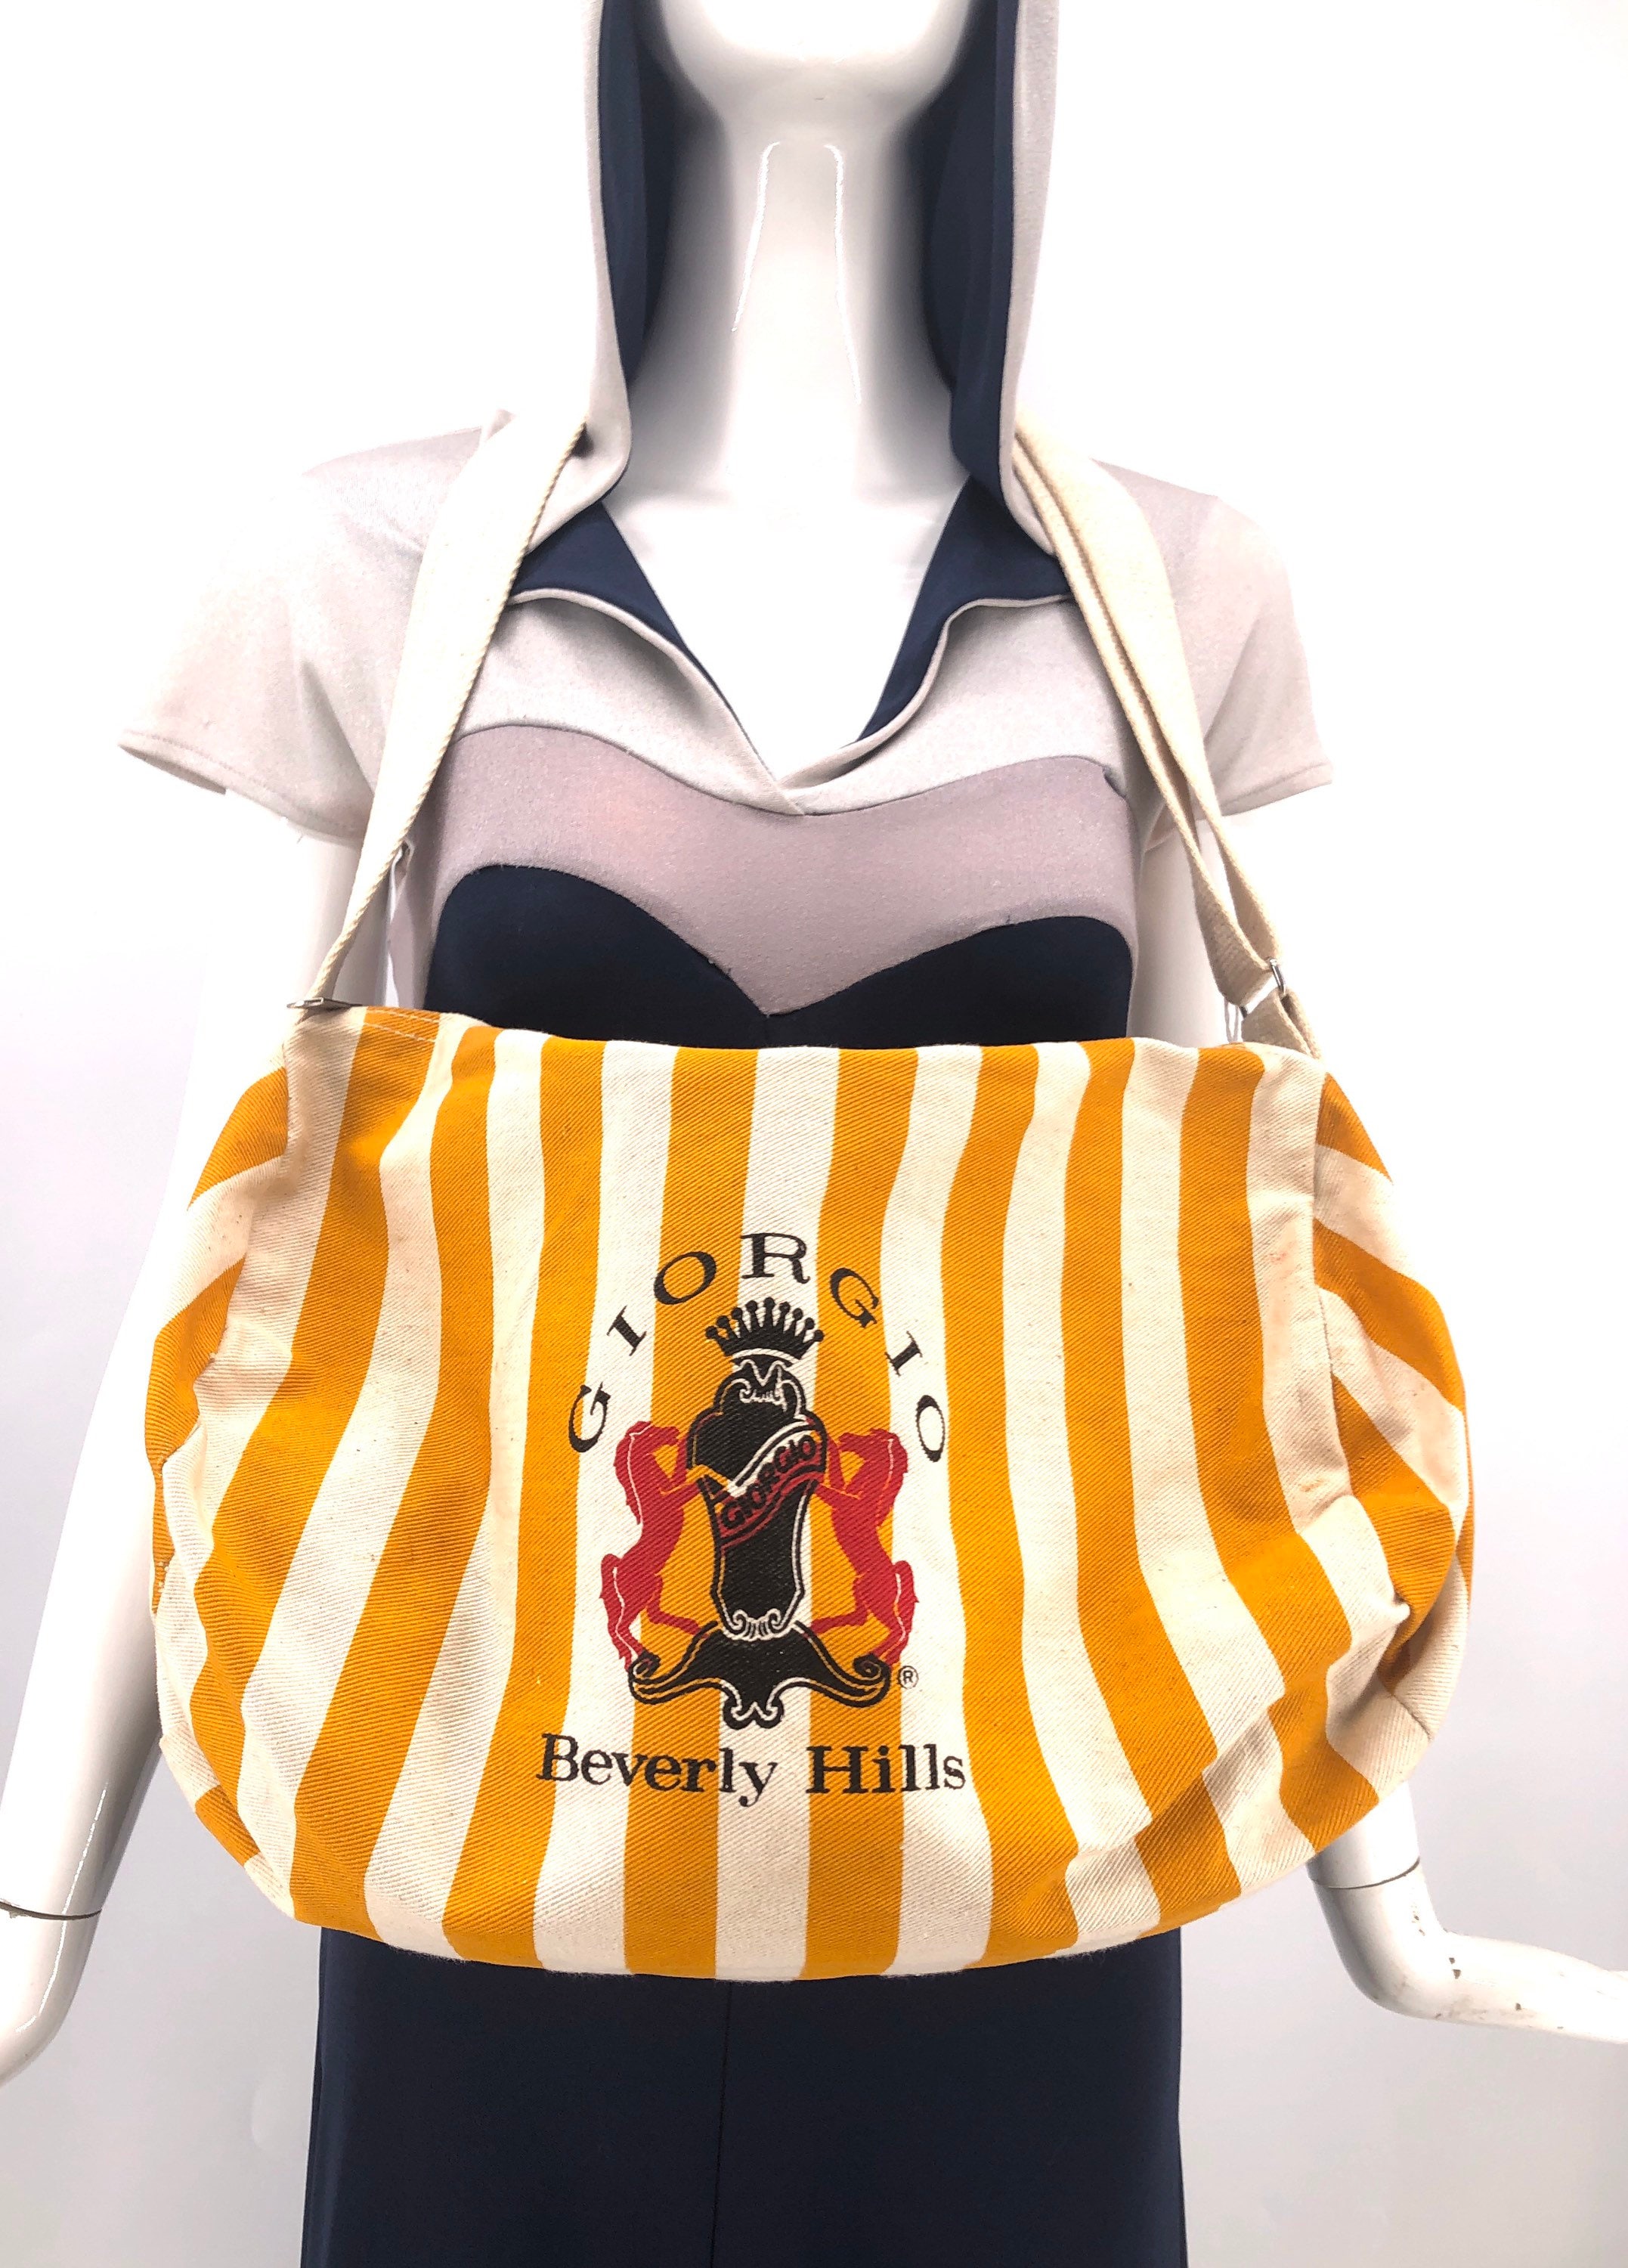 Vintage Giorgio Beverly Hills Bag Found on Etsy | FANCYDOLLHOUSE - YouTube